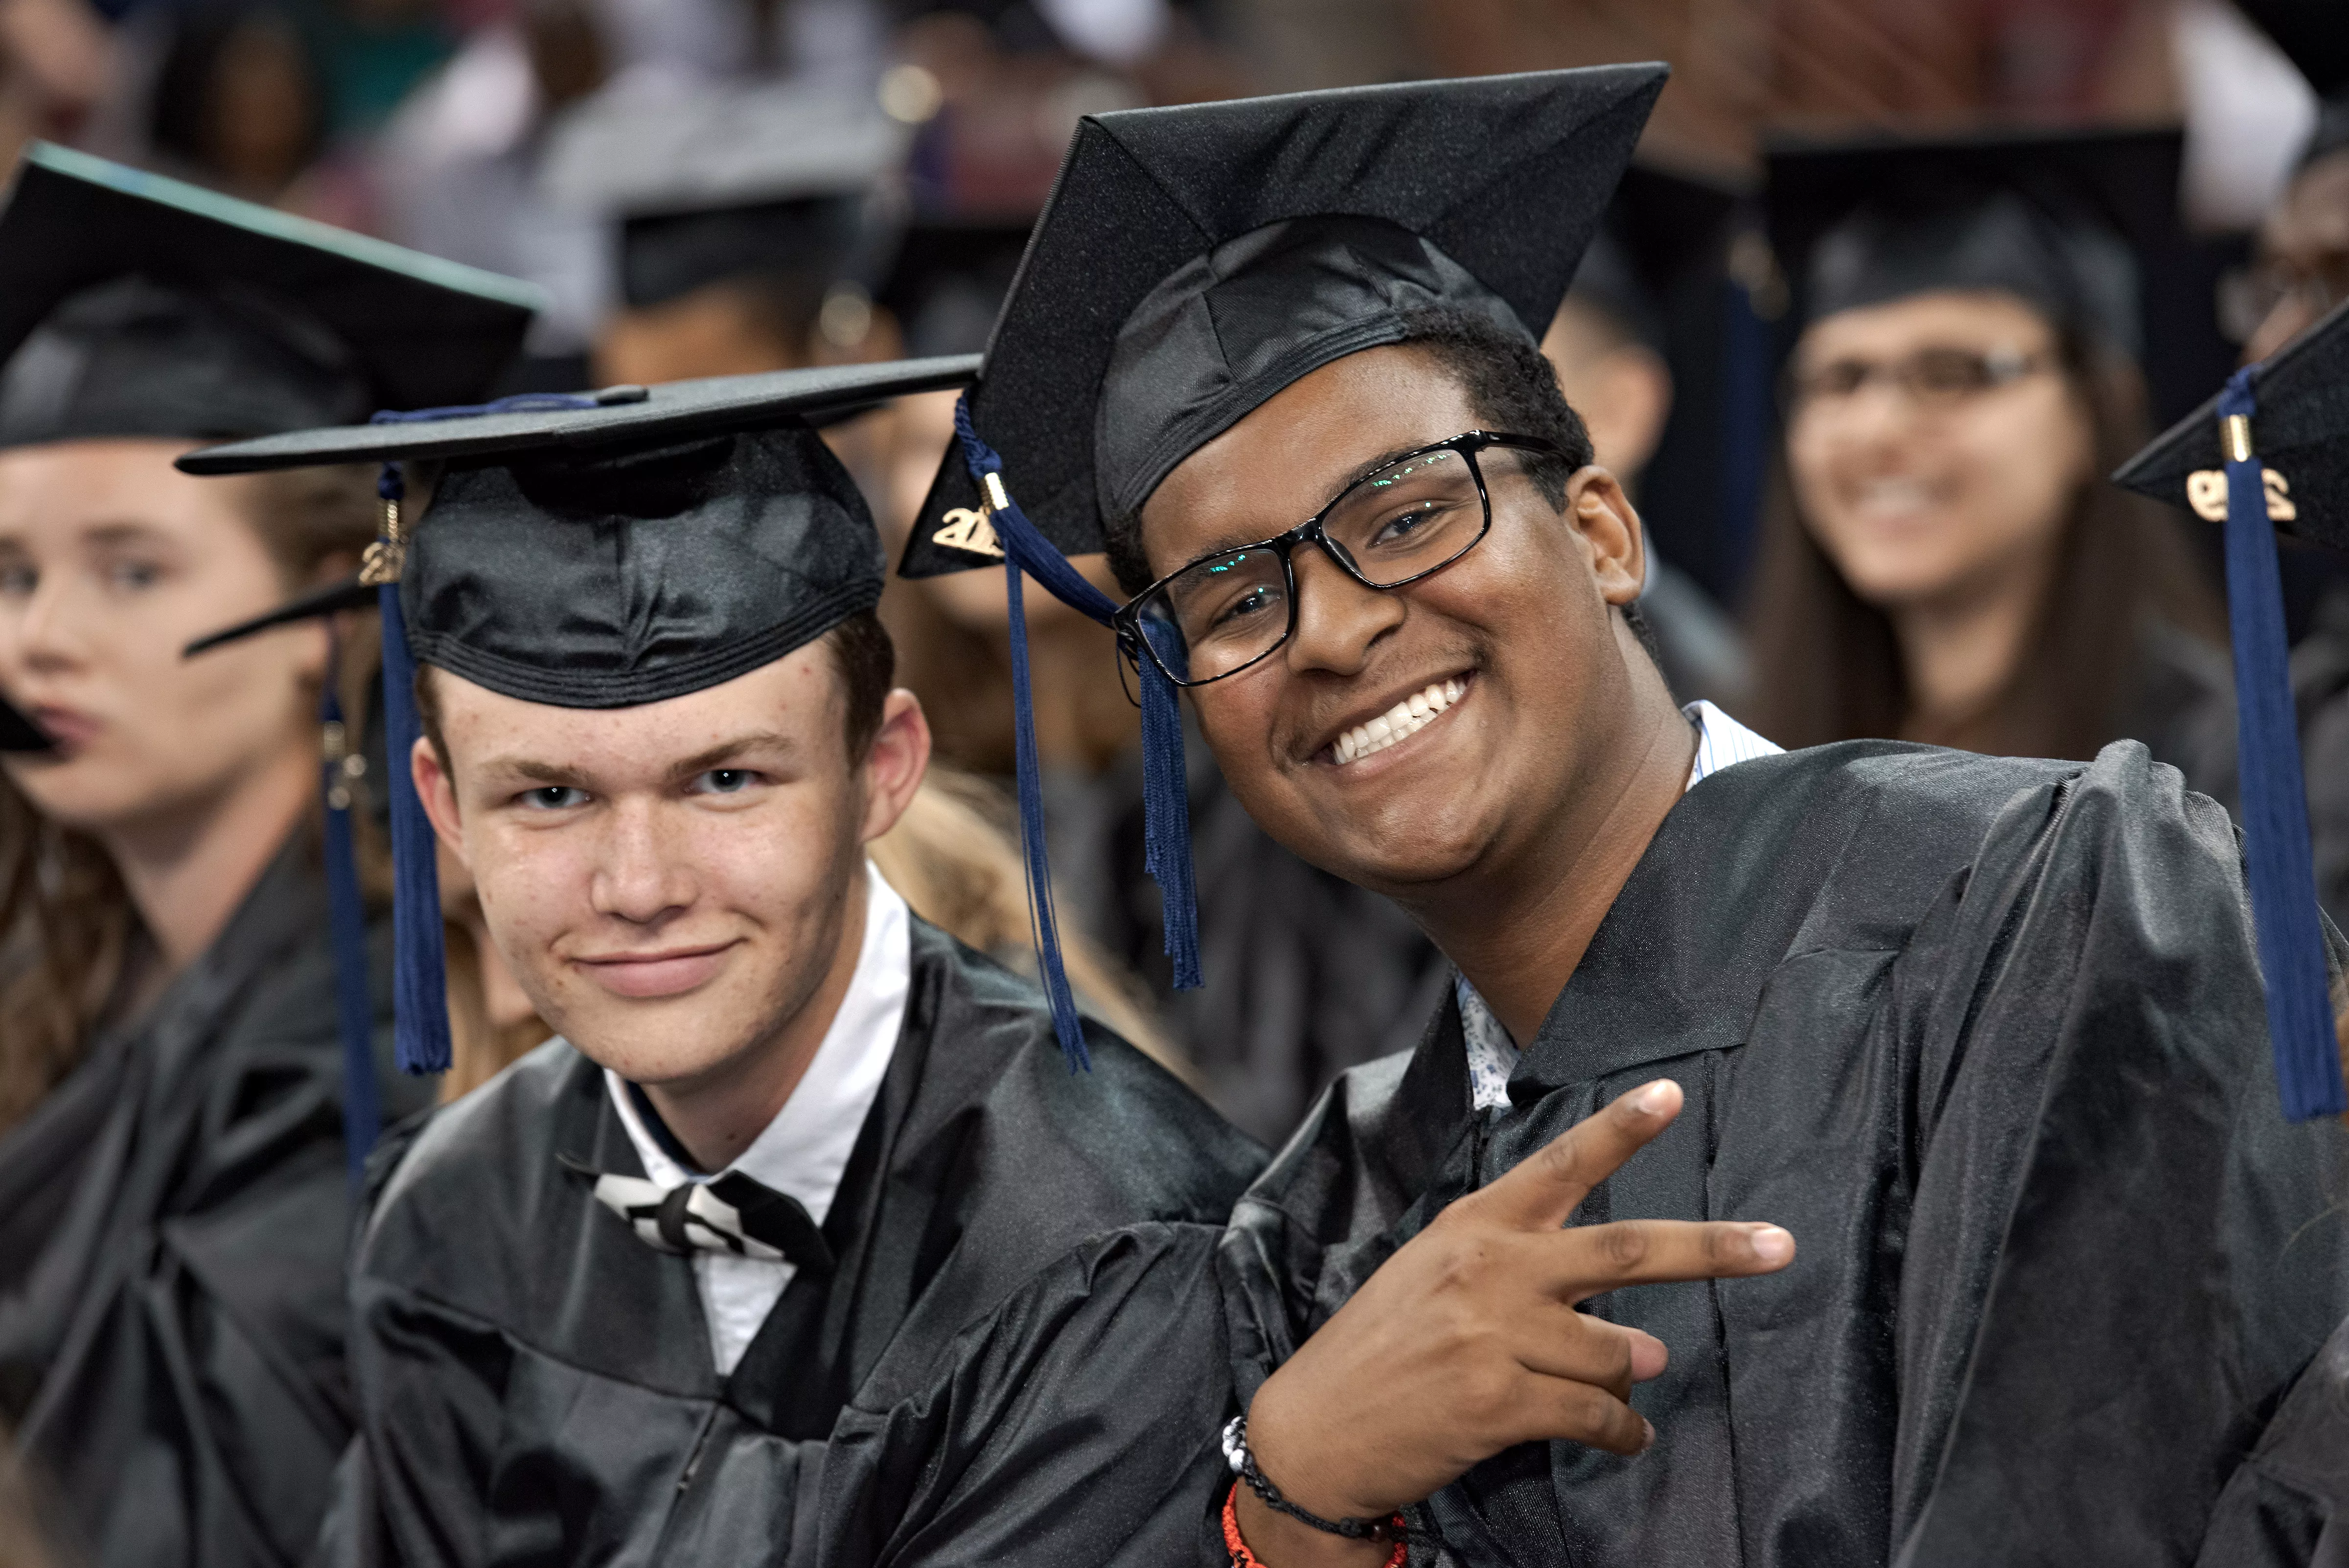 Minority graduate